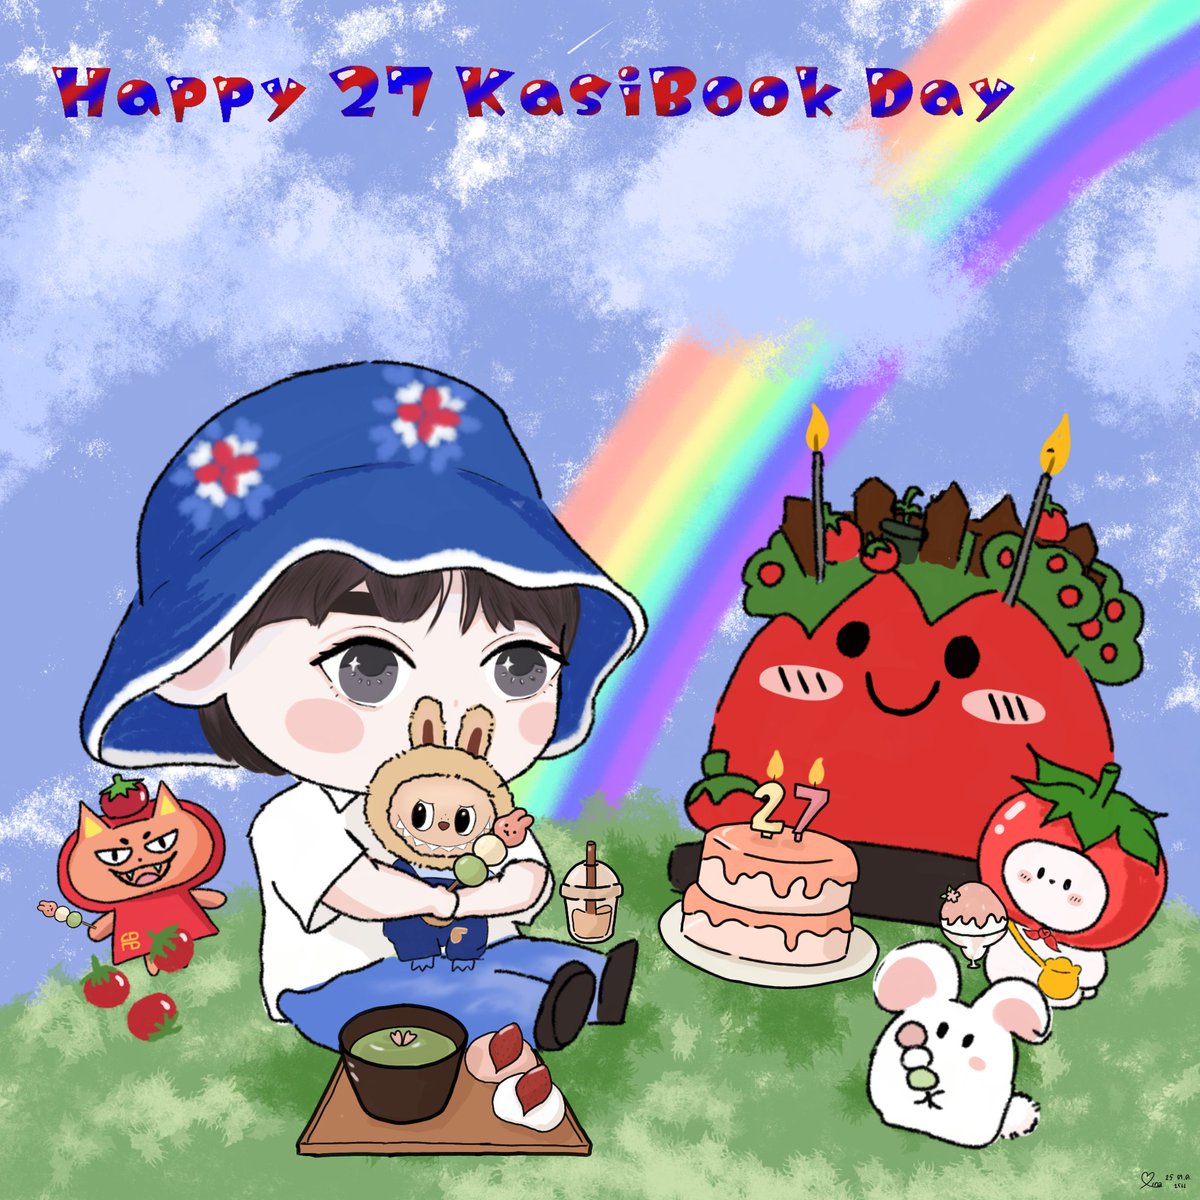 Happy Book Day 🍅

#Happy27KasibookDay 
#kasibook 
#เจ้าพวกมะเขือเทศ 
#ชาวบรรณา